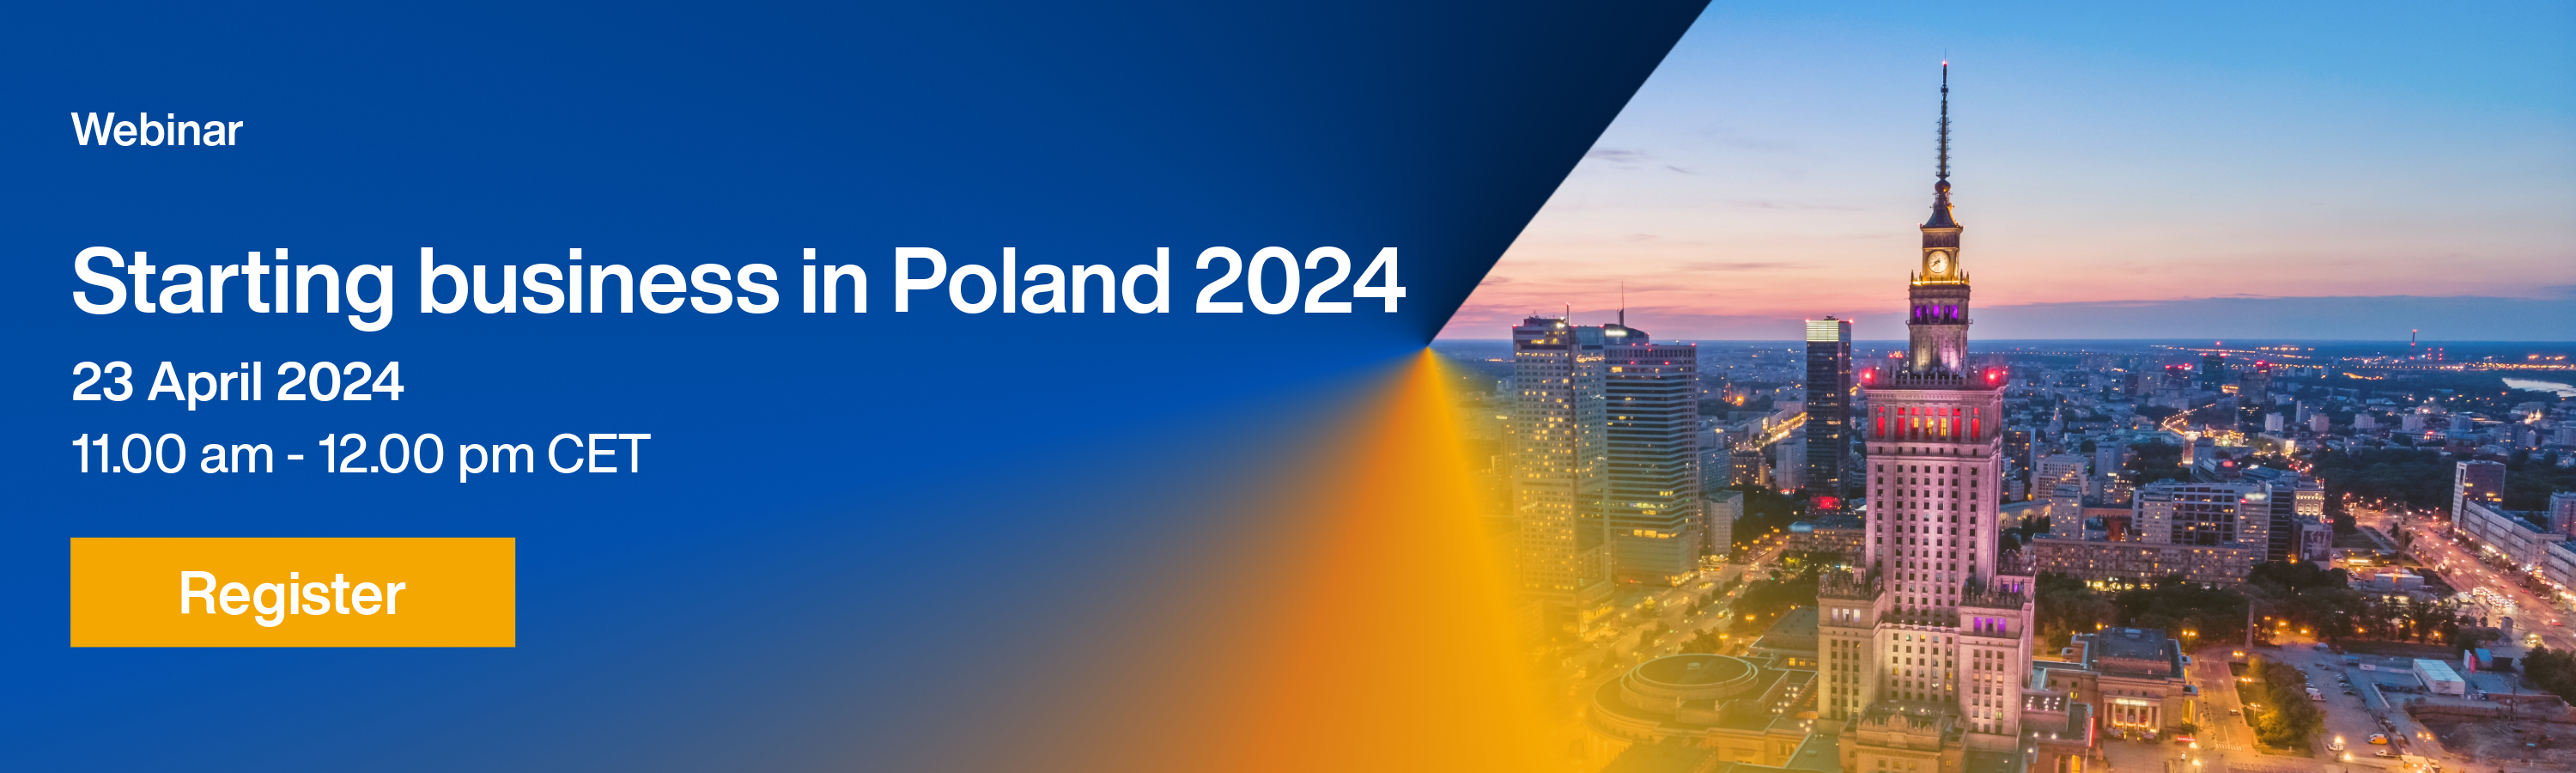 starting business in poland 2024 webinar